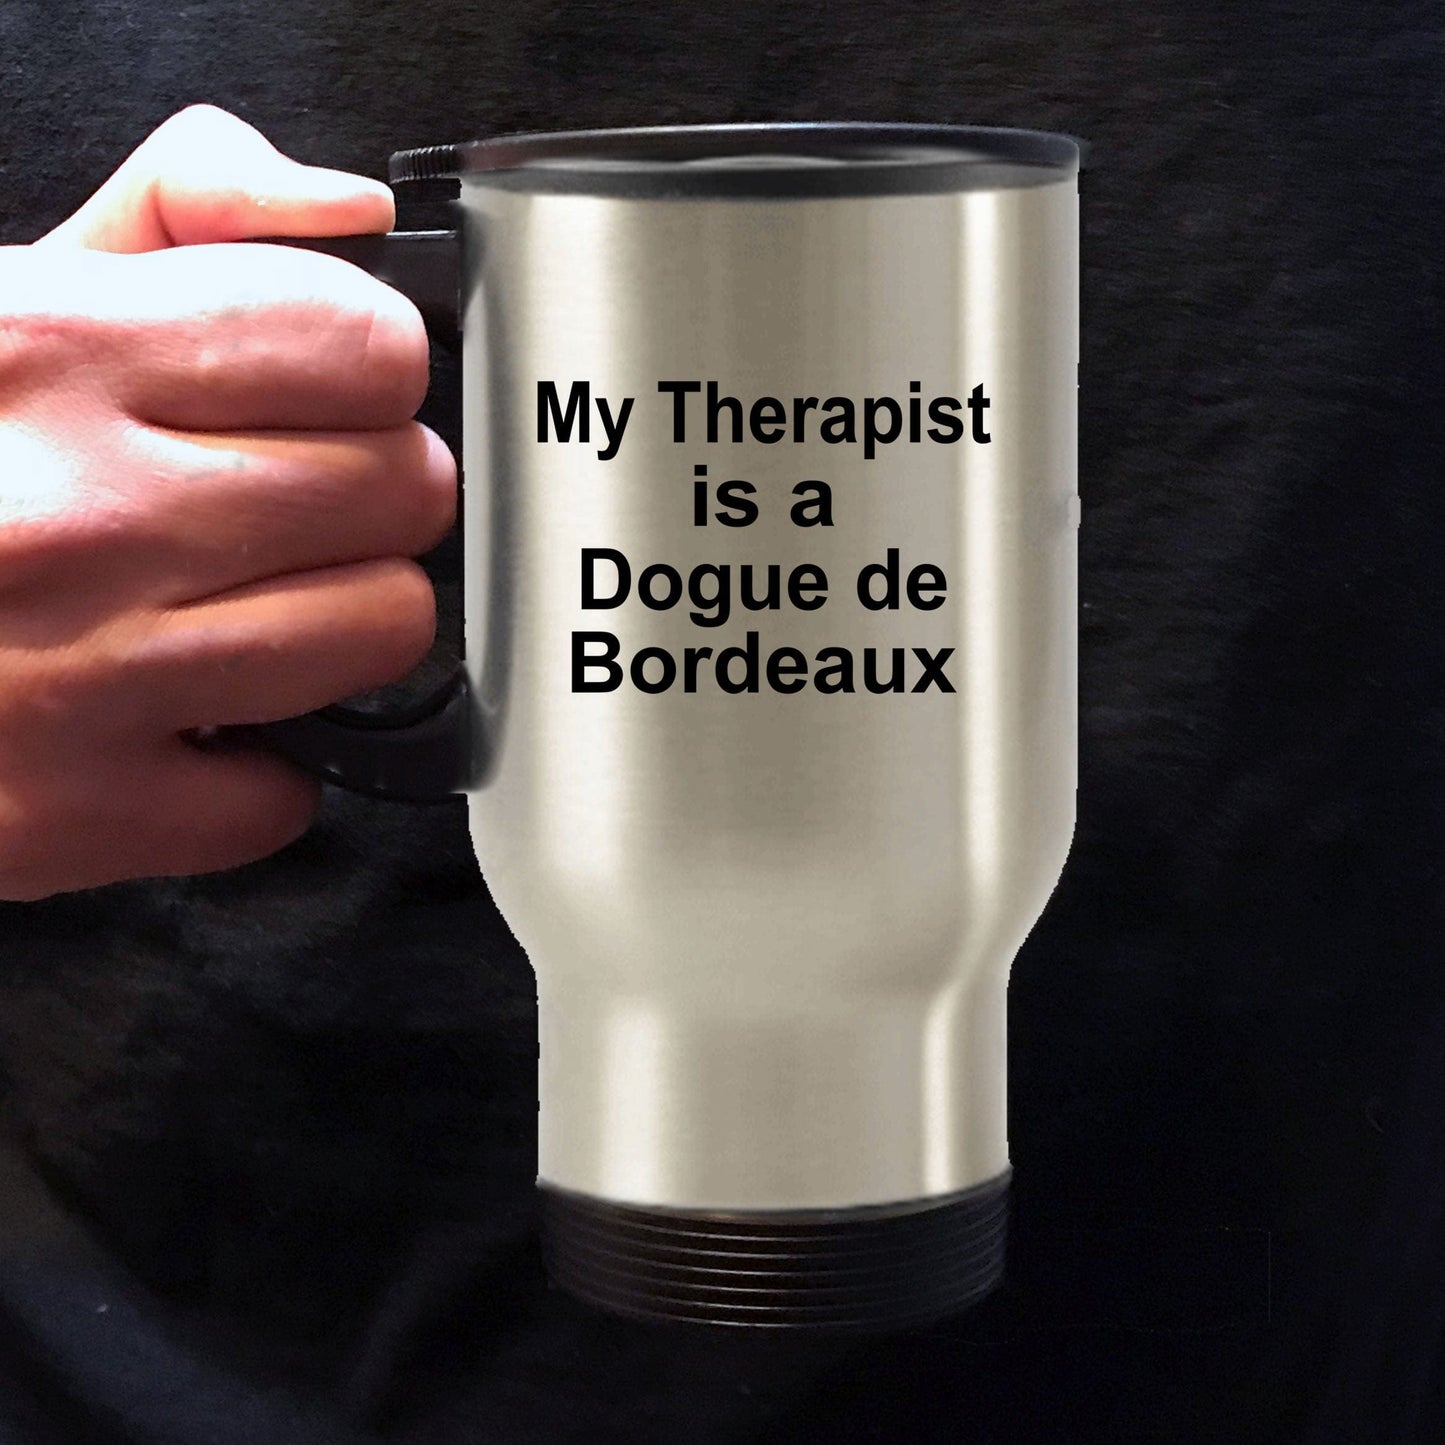 Dogue de Bordeaux Dog Therapist Travel Coffee Mug